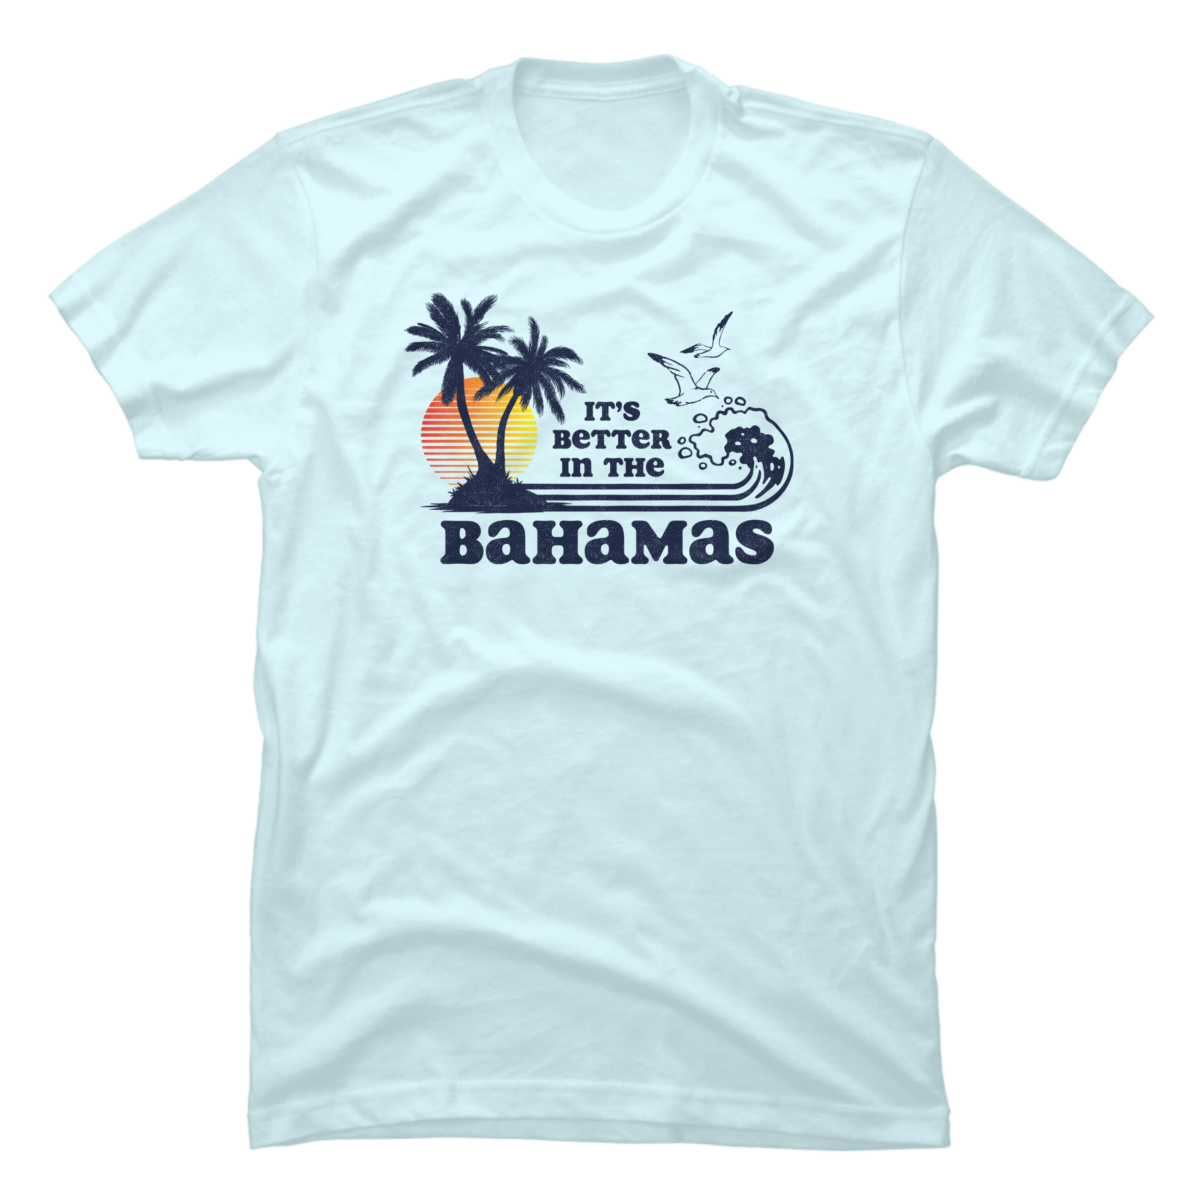 nassau bahamas t shirts